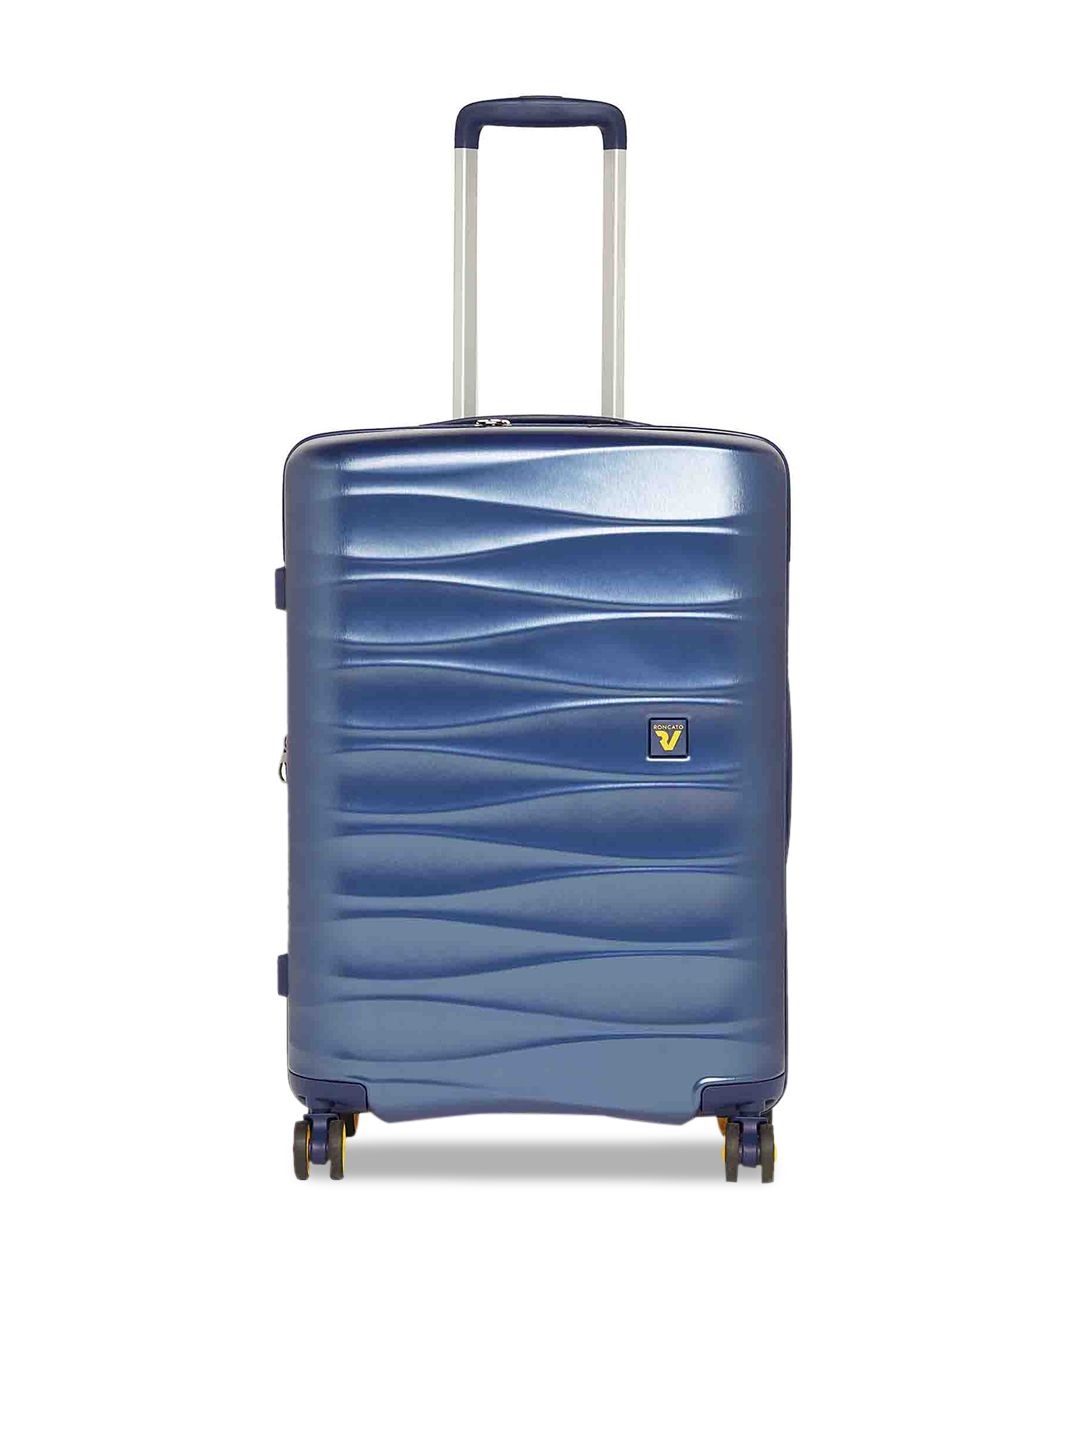 RONCATO STELLAR Range Blue Notte Color Hard Medium Luggage Price in India